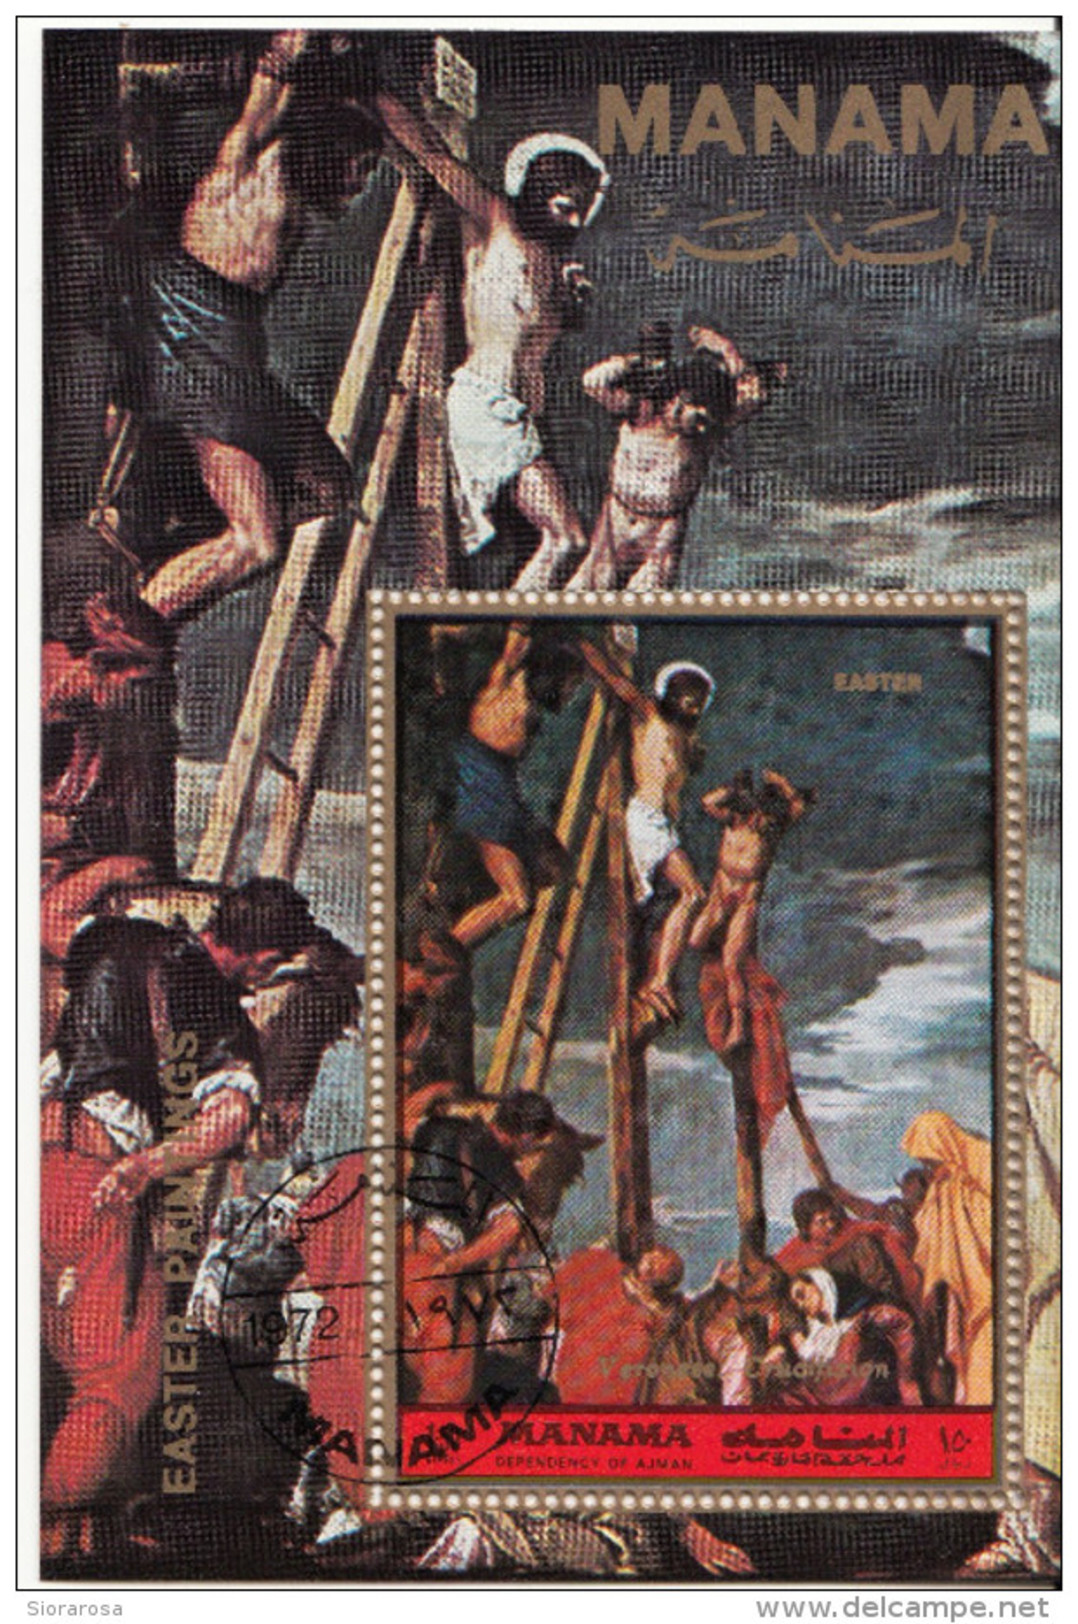 Manama 1972 "La Crocifissione" Quadro Dipinto Dal Veronese Paintings Manierismo Vangeli Easter - Tableaux